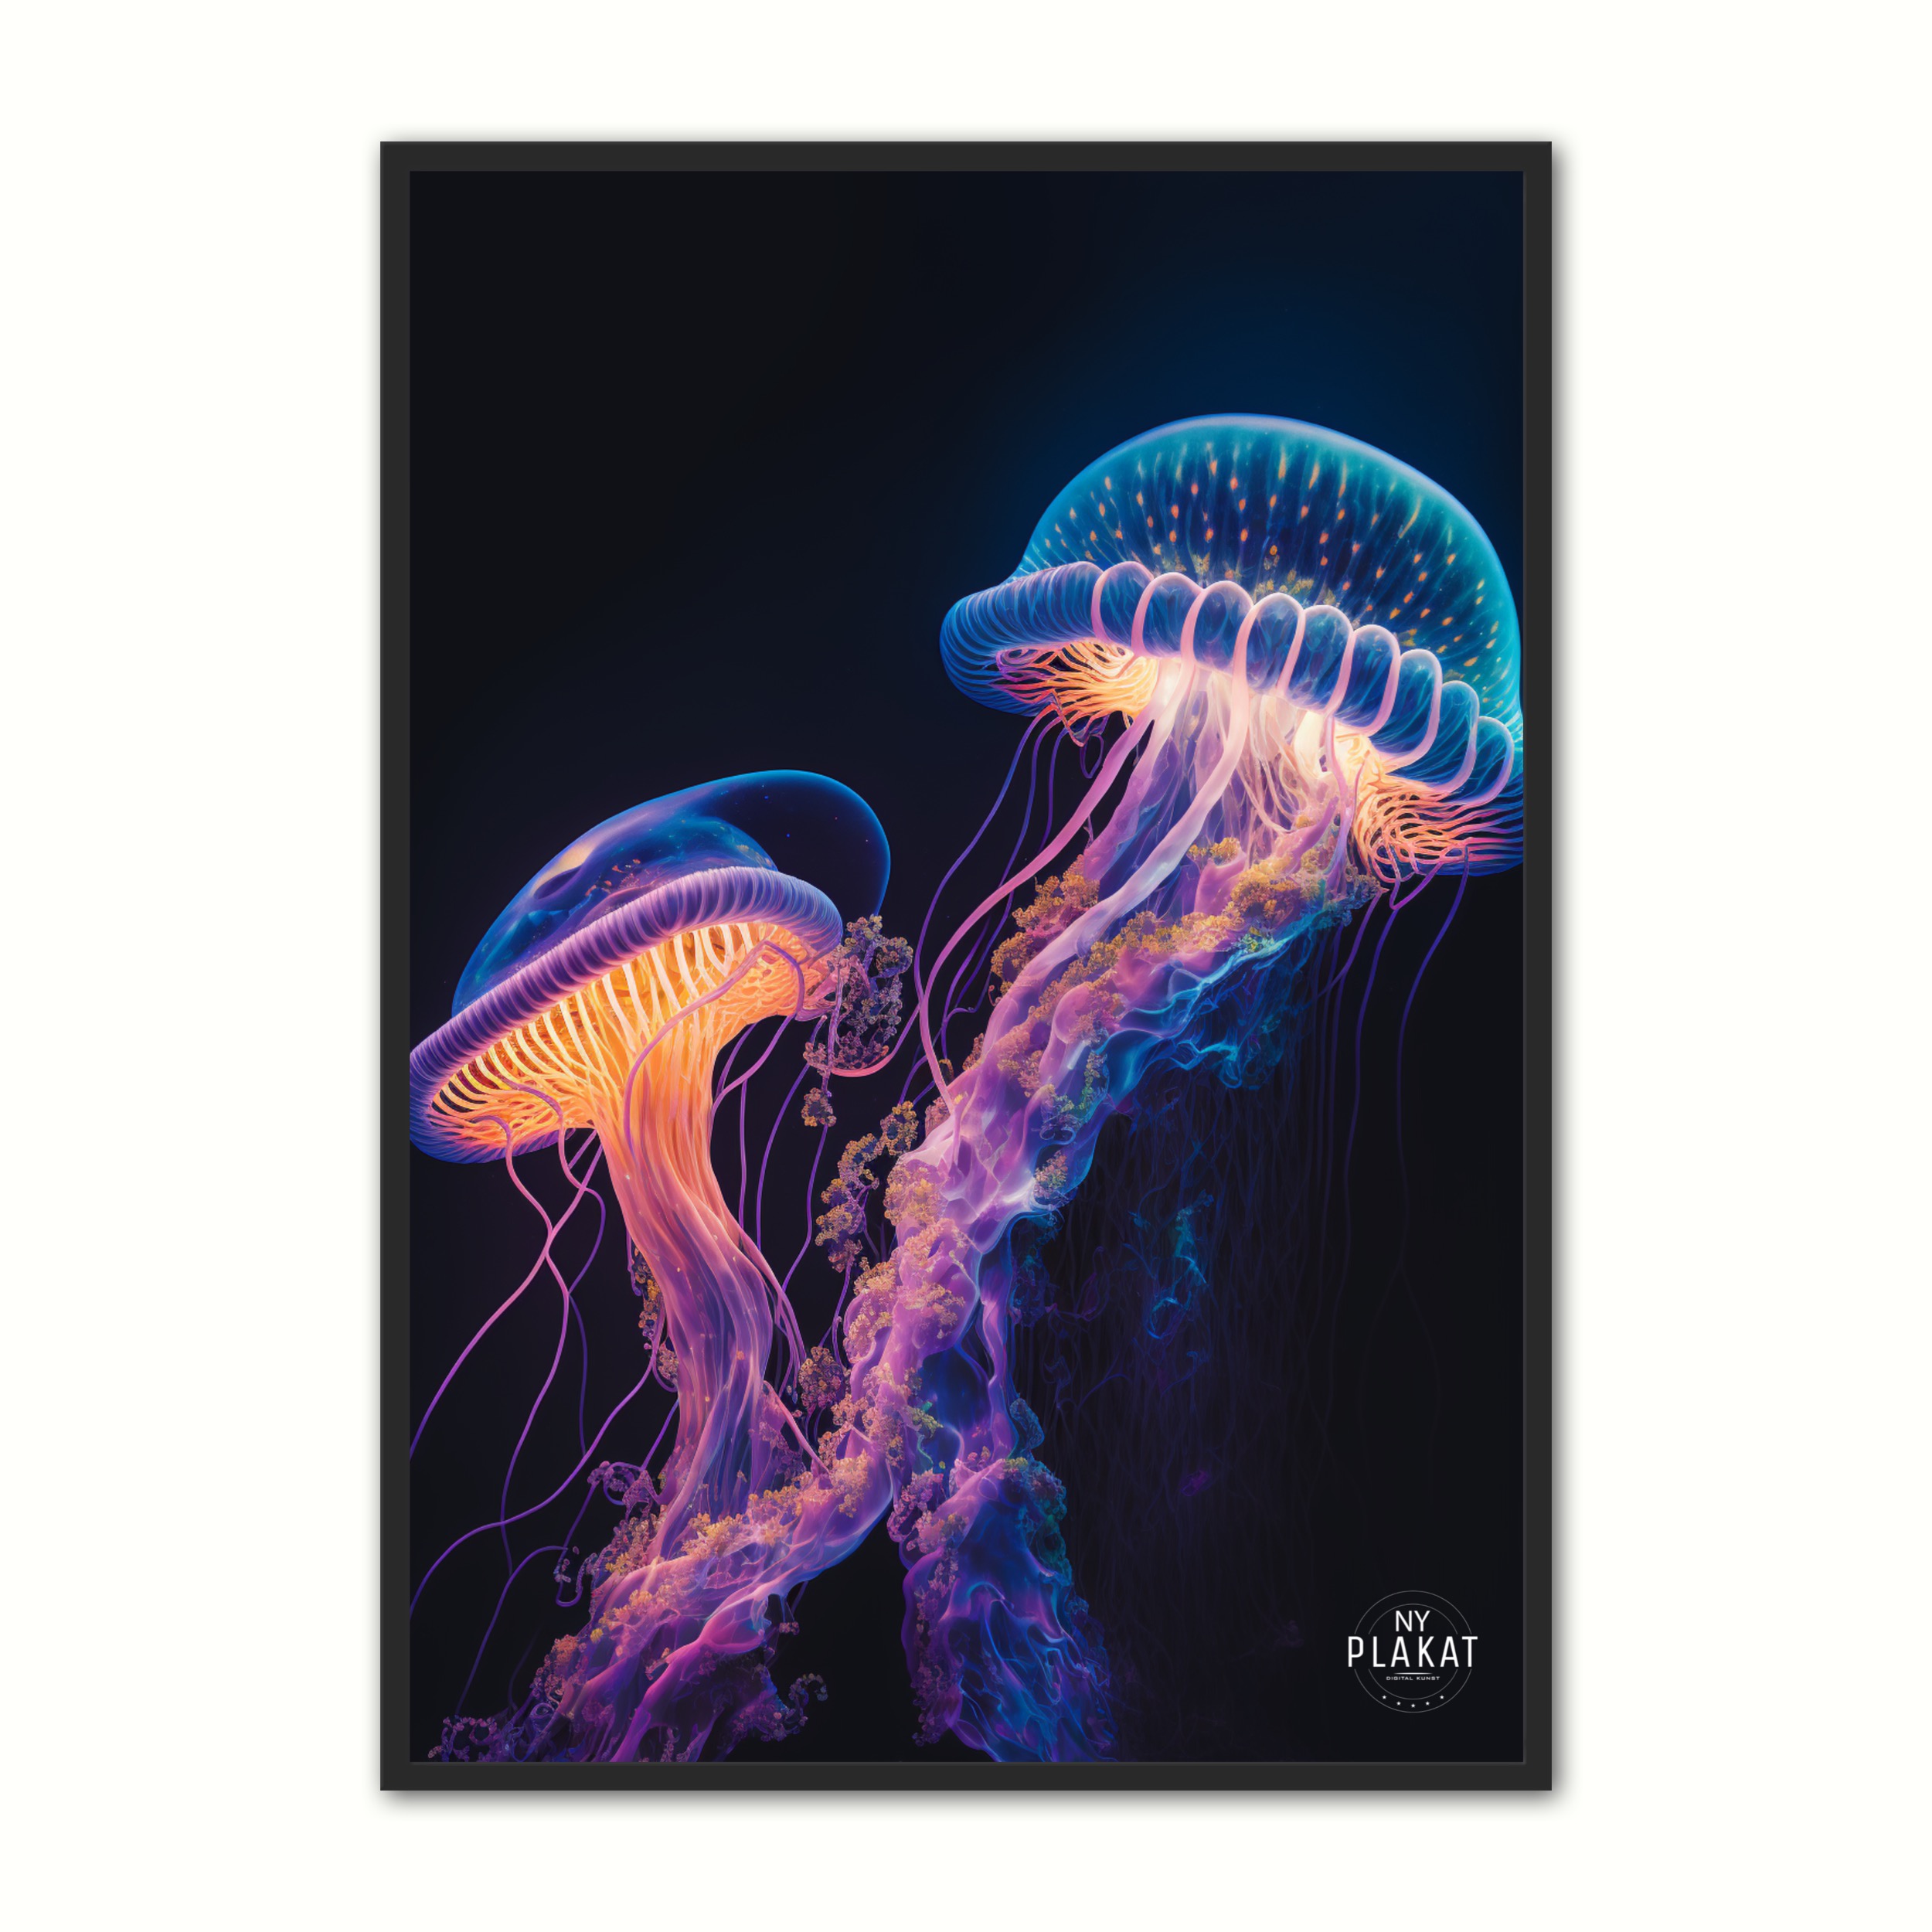 Se Jellyfish plakat No. 4 50 x 70 cm (B2) hos Nyplakat.dk